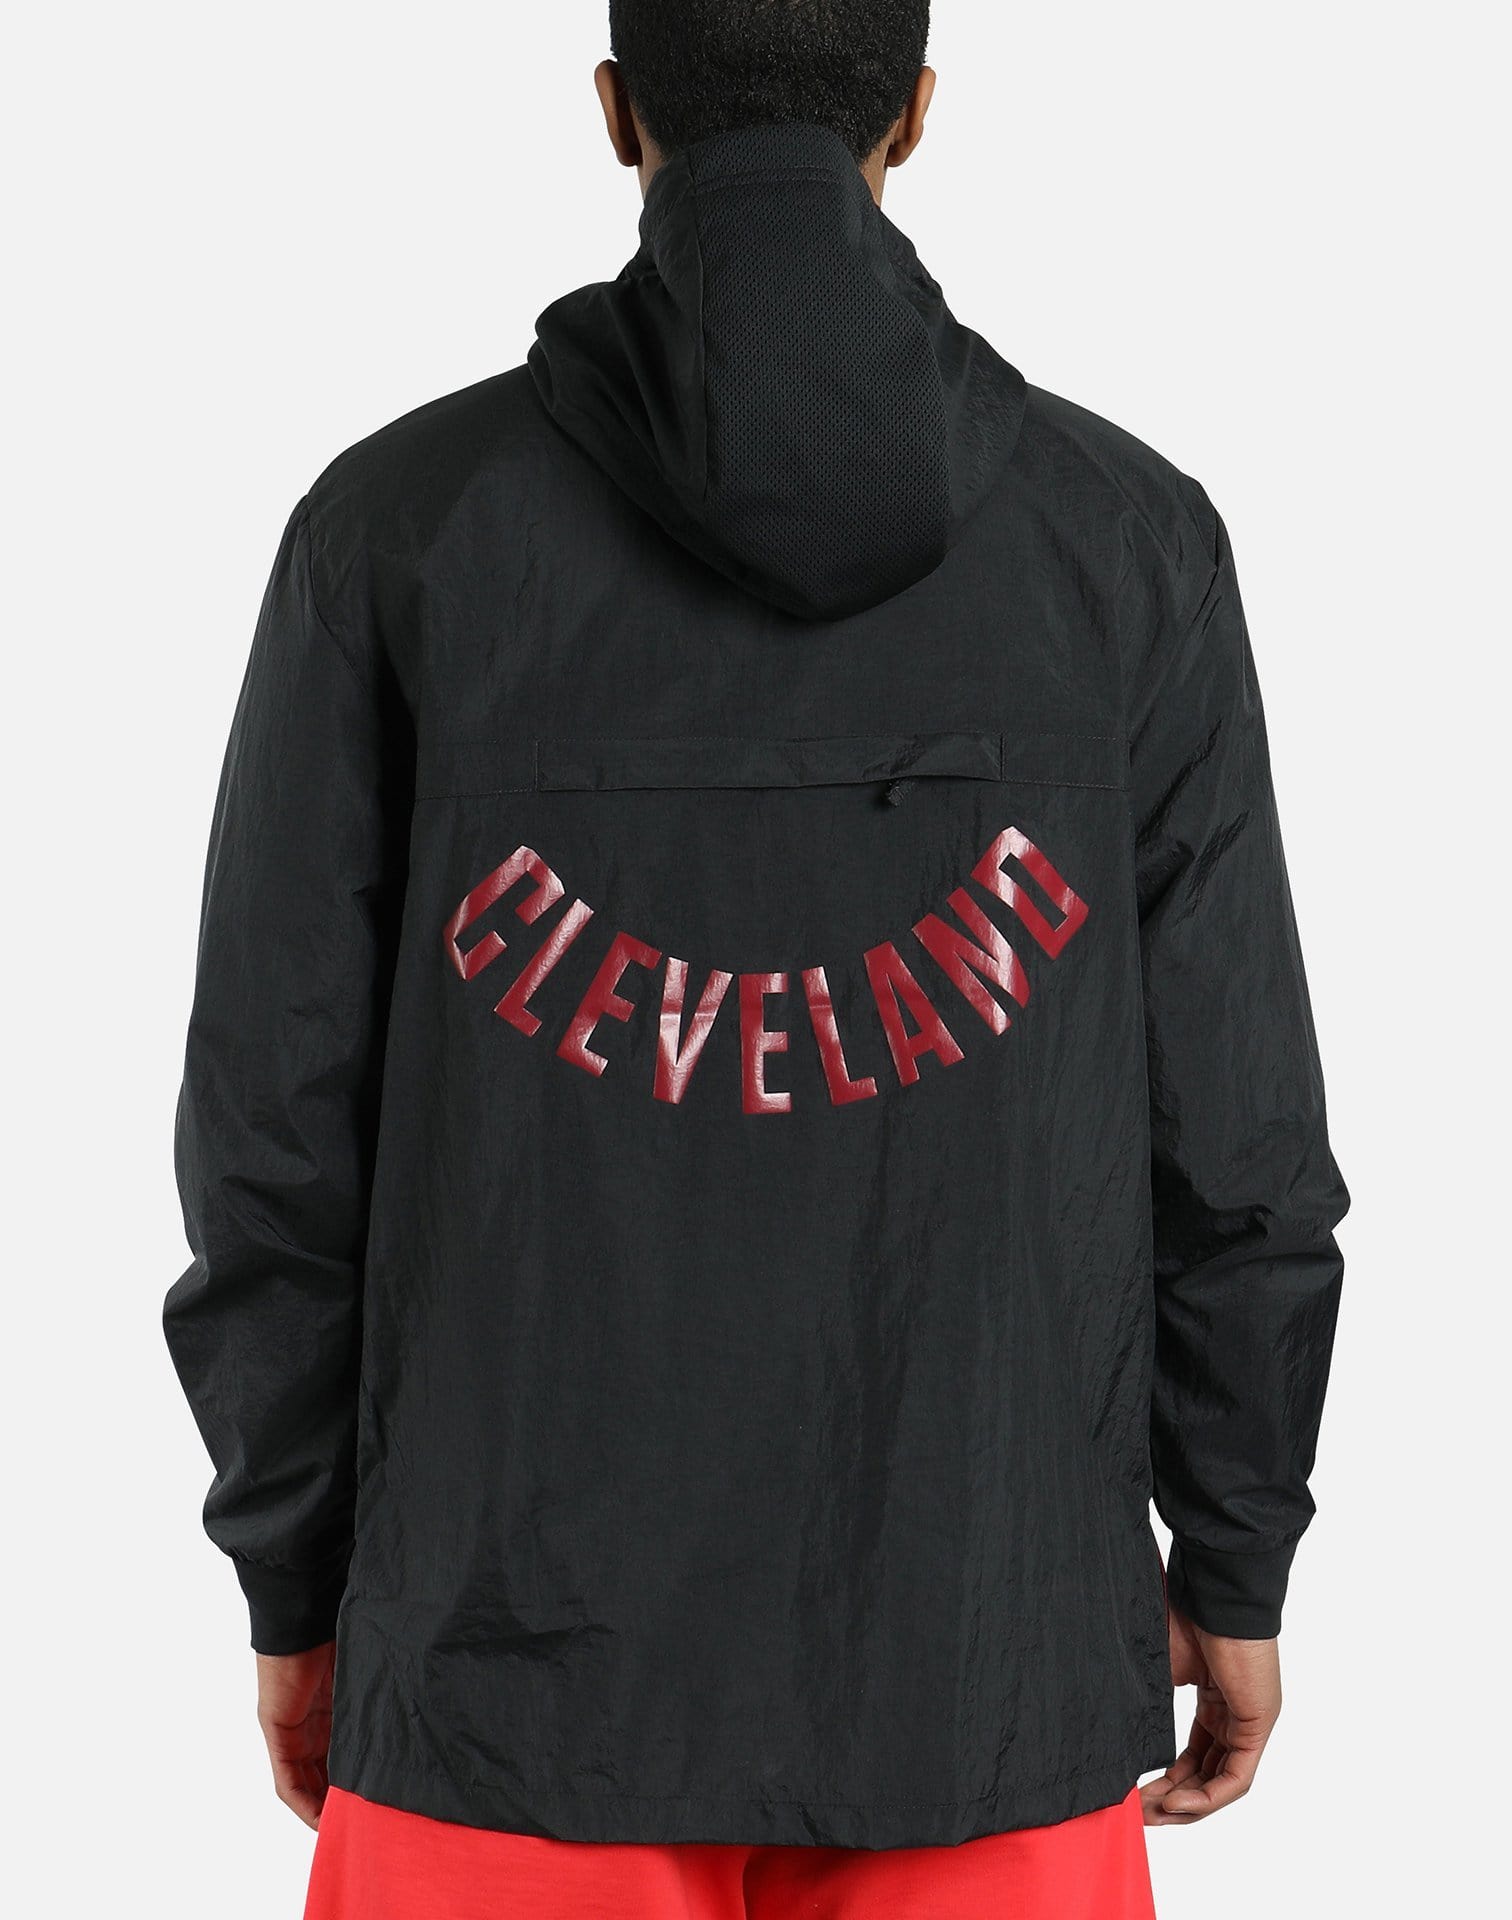 Nike NBA Cleveland Cavaliers Woven Packable Jacket